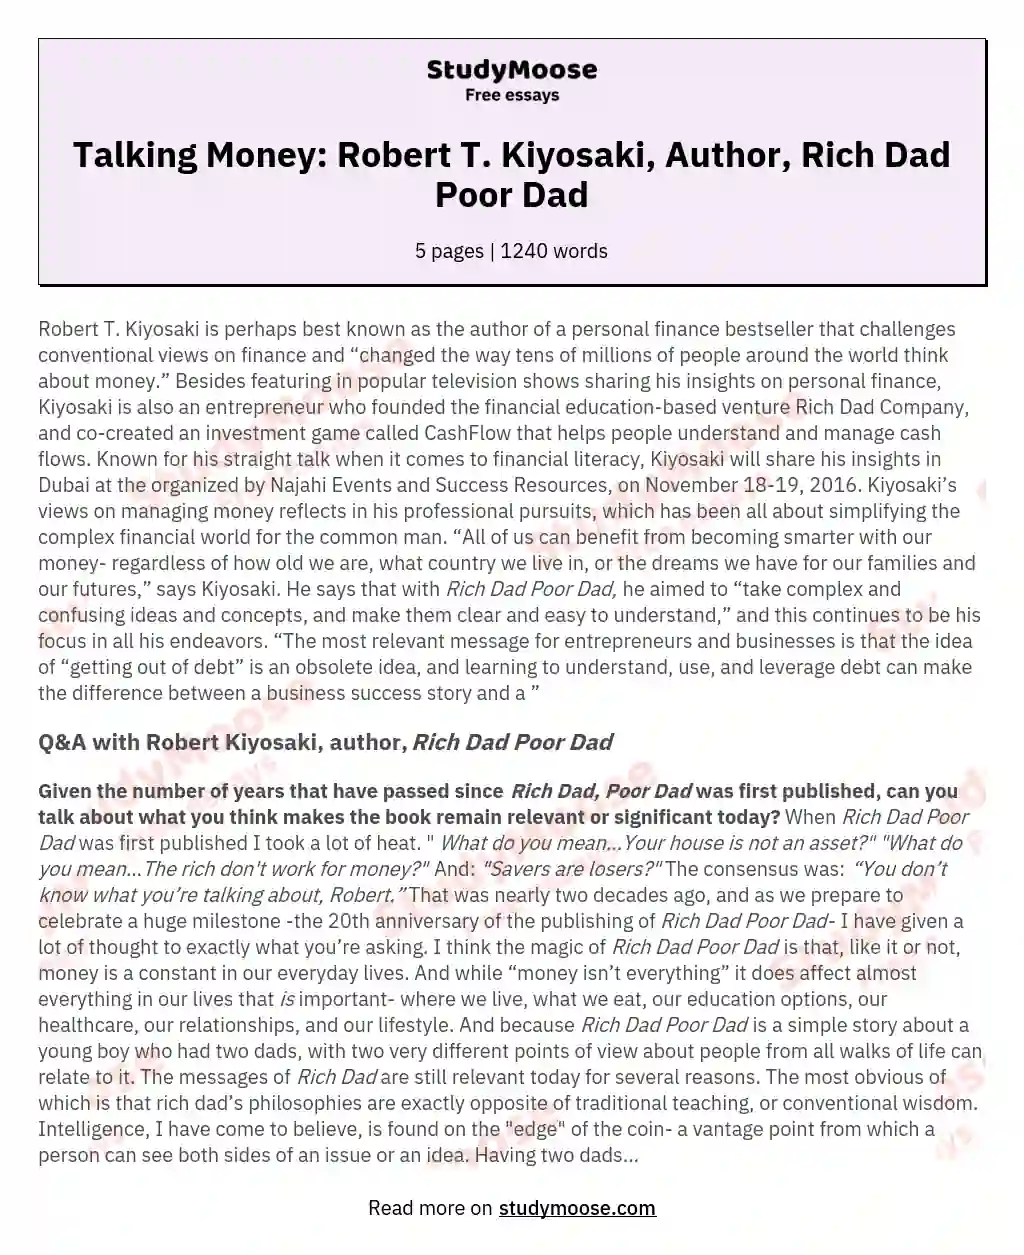 Talking Money: Robert T. Kiyosaki, Author, Rich Dad Poor Dad